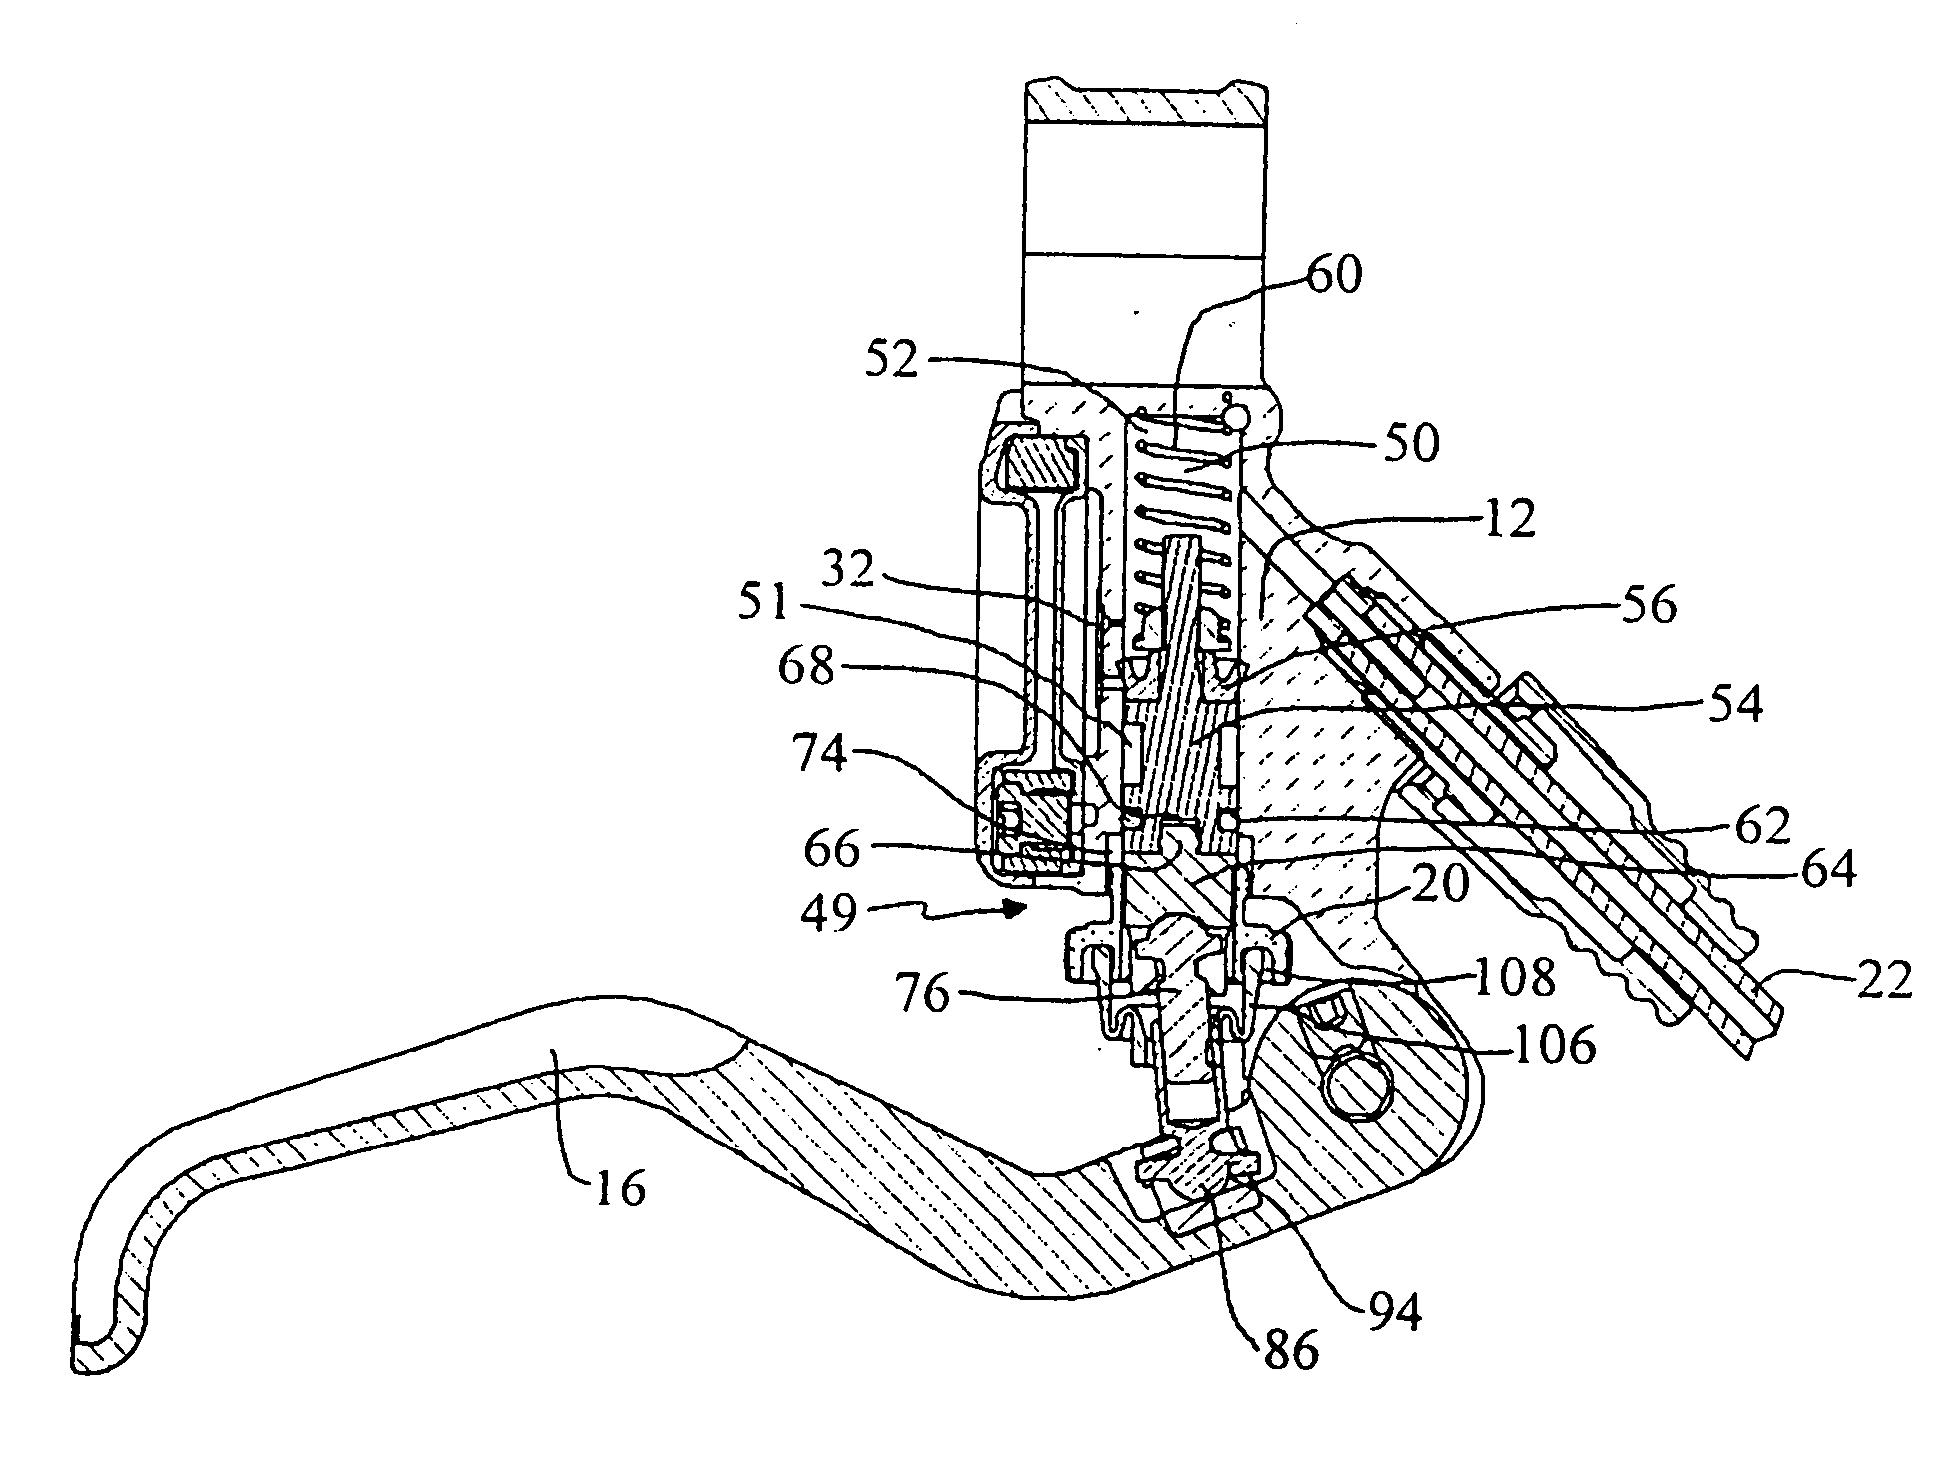 Master cylinder lever for a hydraulic disc brake having a backpack reservoir